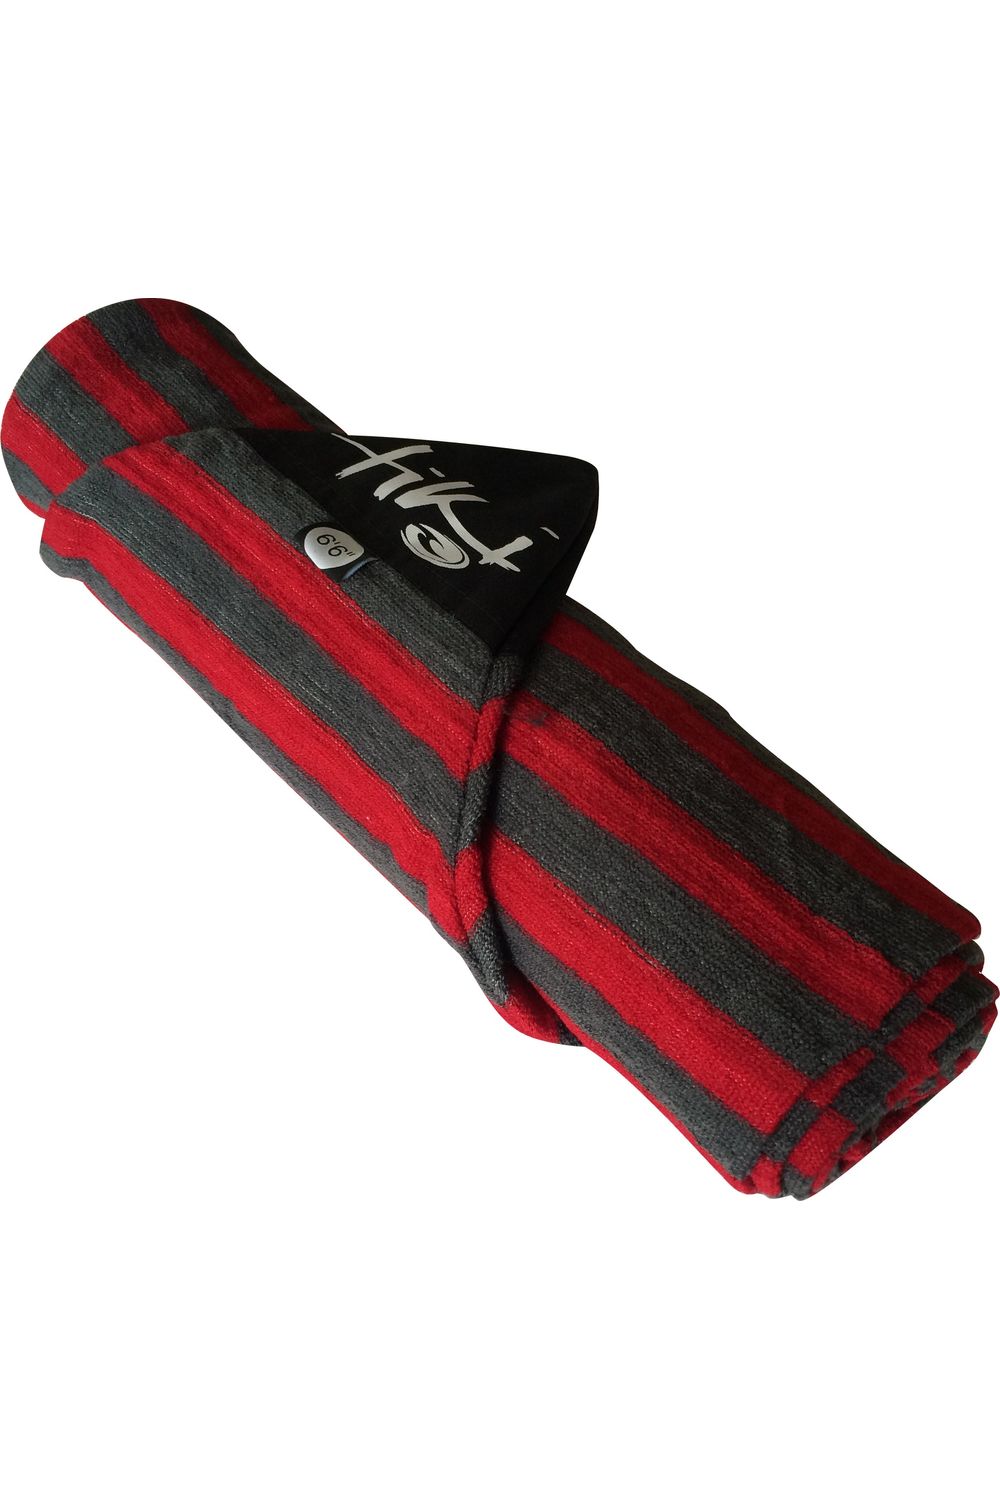 Tiki Surfboard Stretch Sock - Shortboard Shape Red Grey